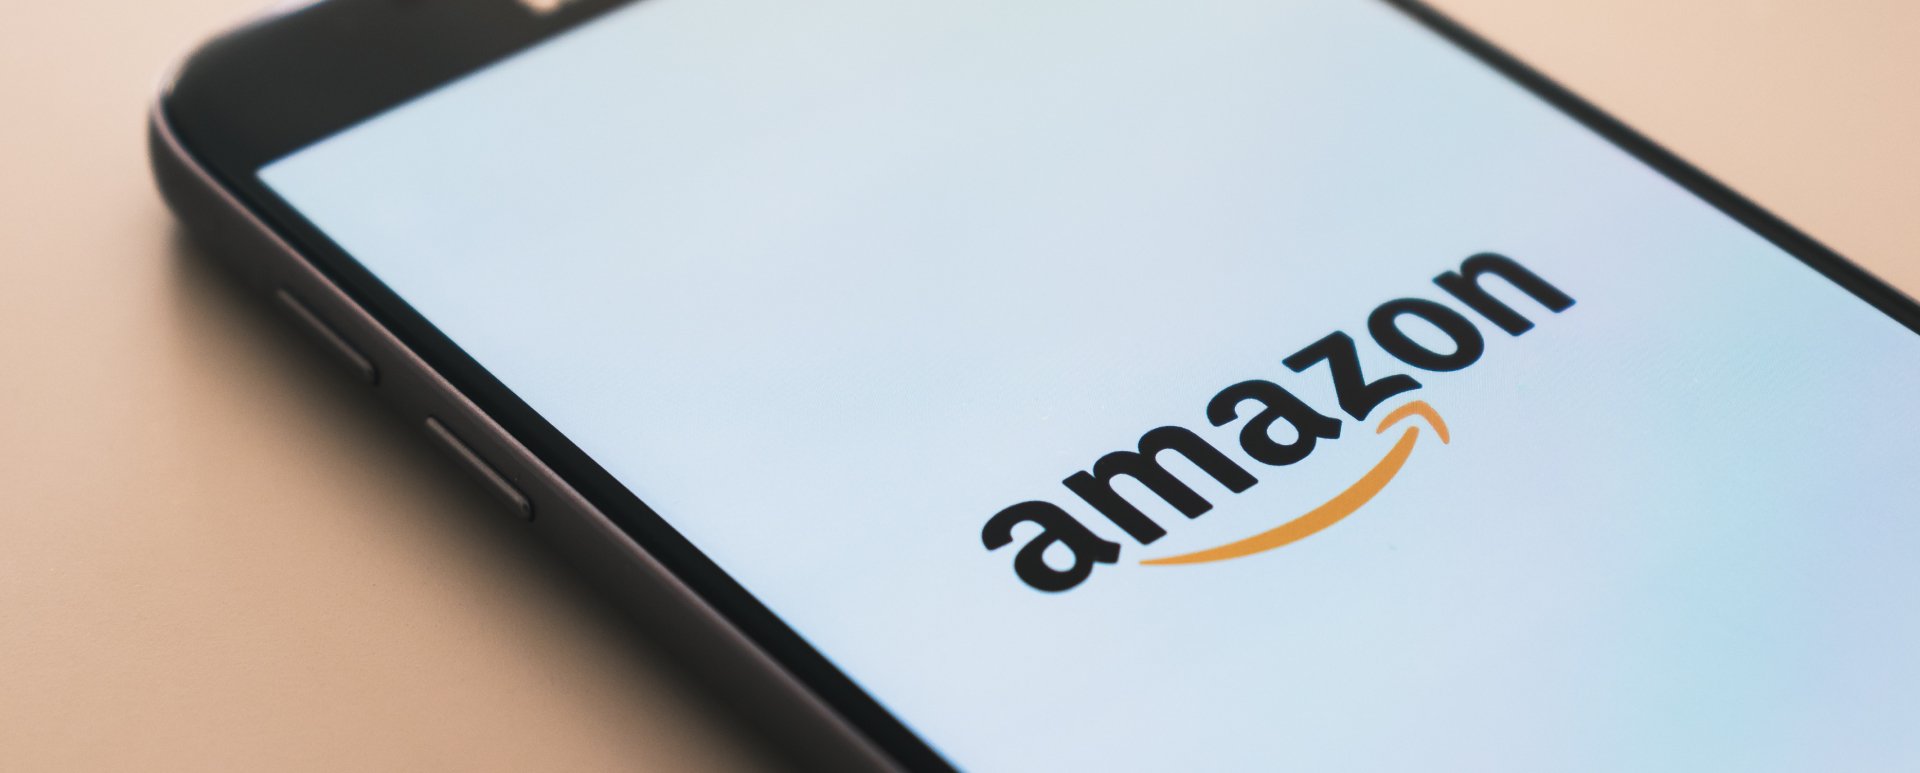 Amazon logo on a smartphone.